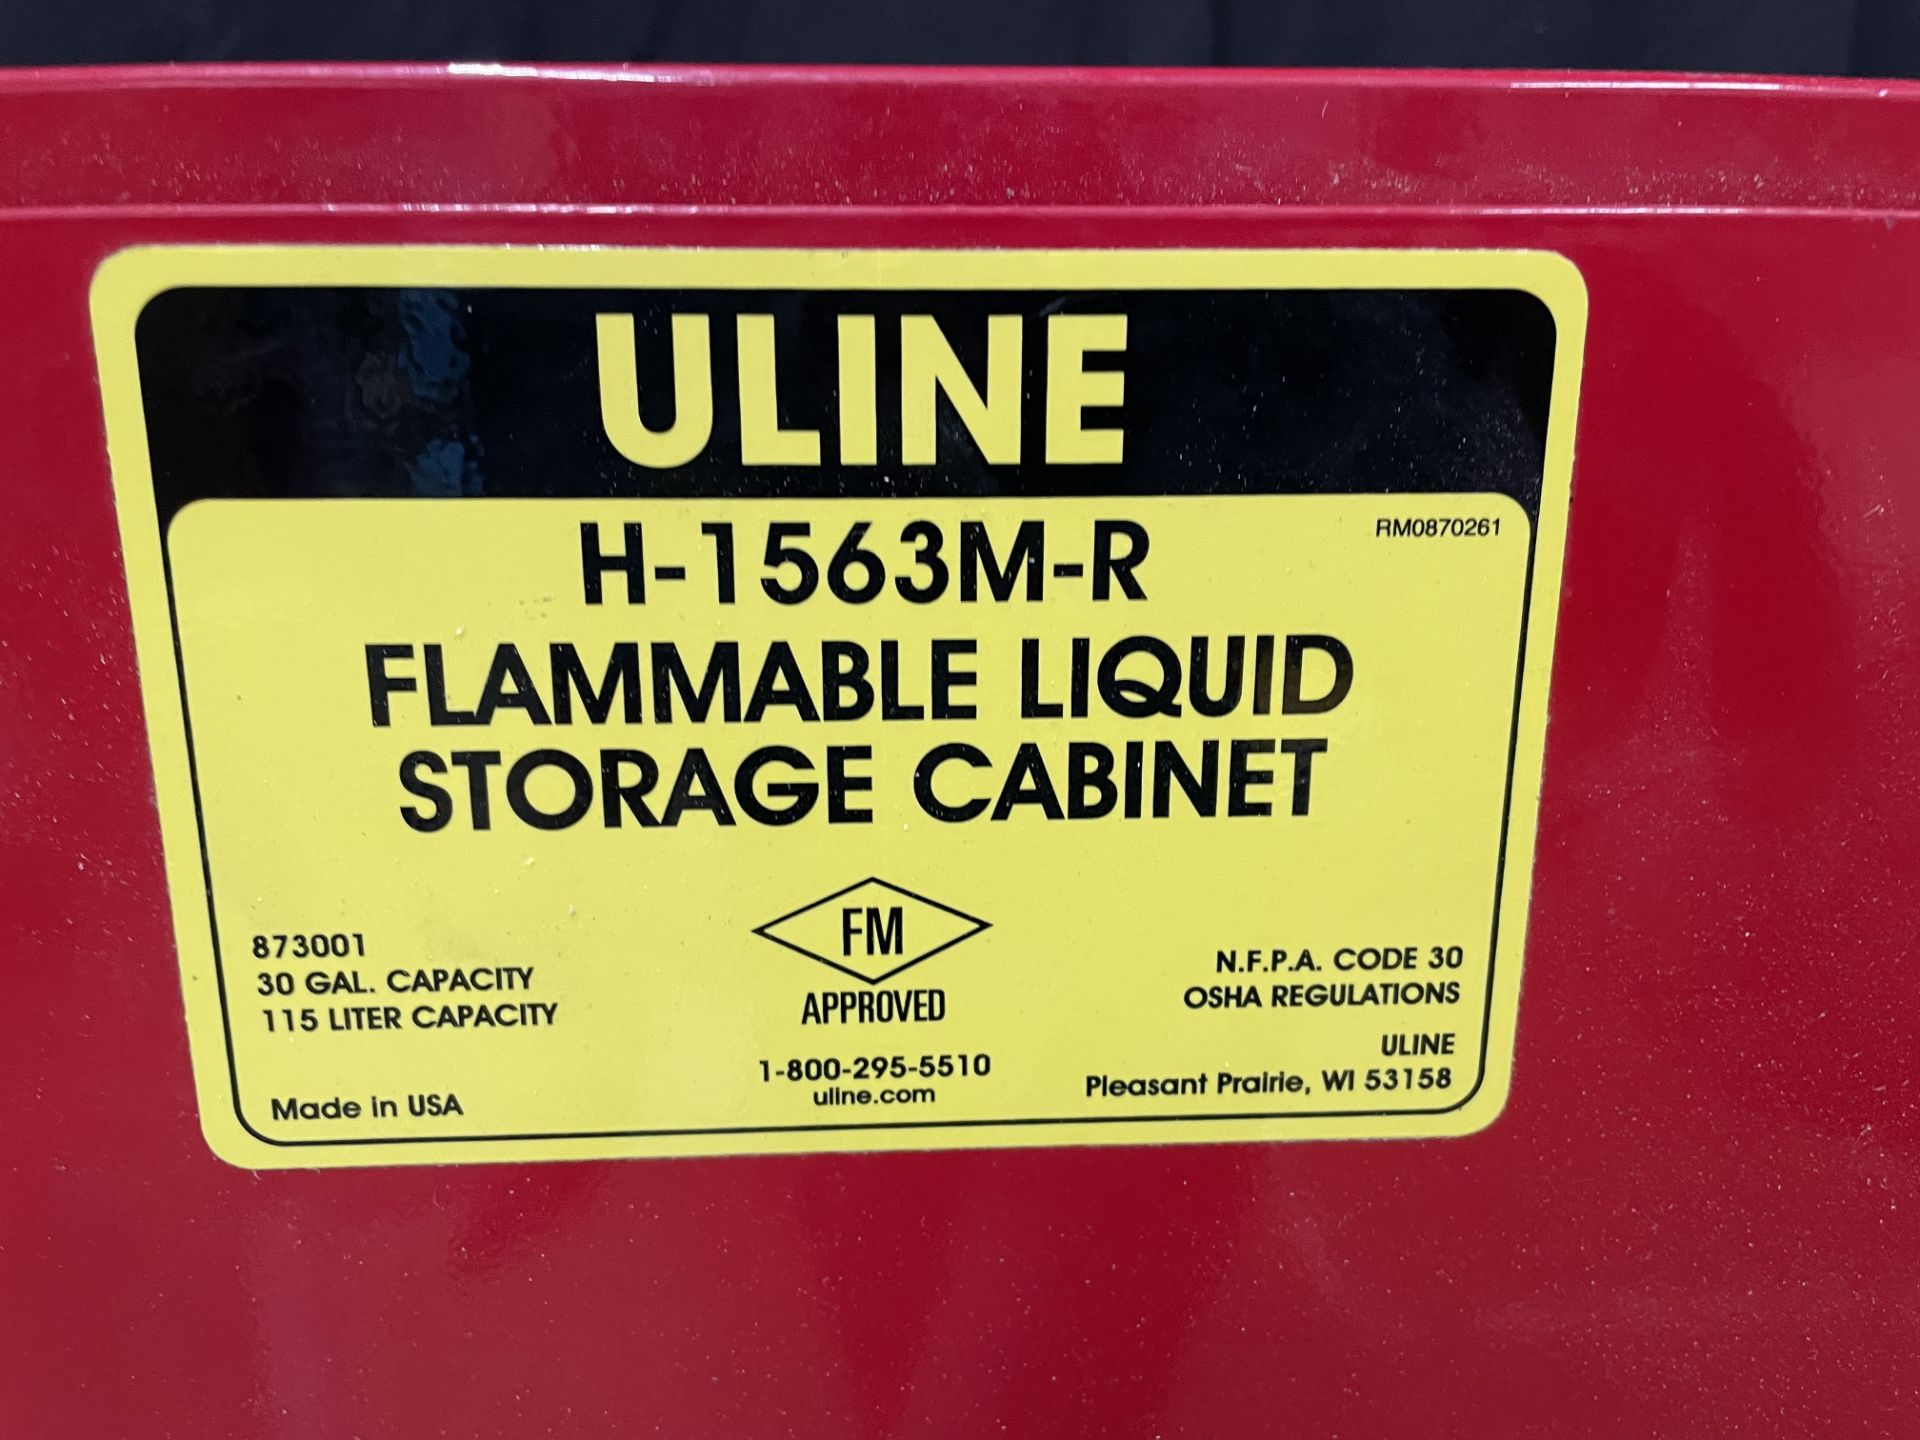 Uline Model H-1563M-R Flammable Liquid Storage Cabinet, 30 Gallon/115 Liter Capacity - Image 2 of 3